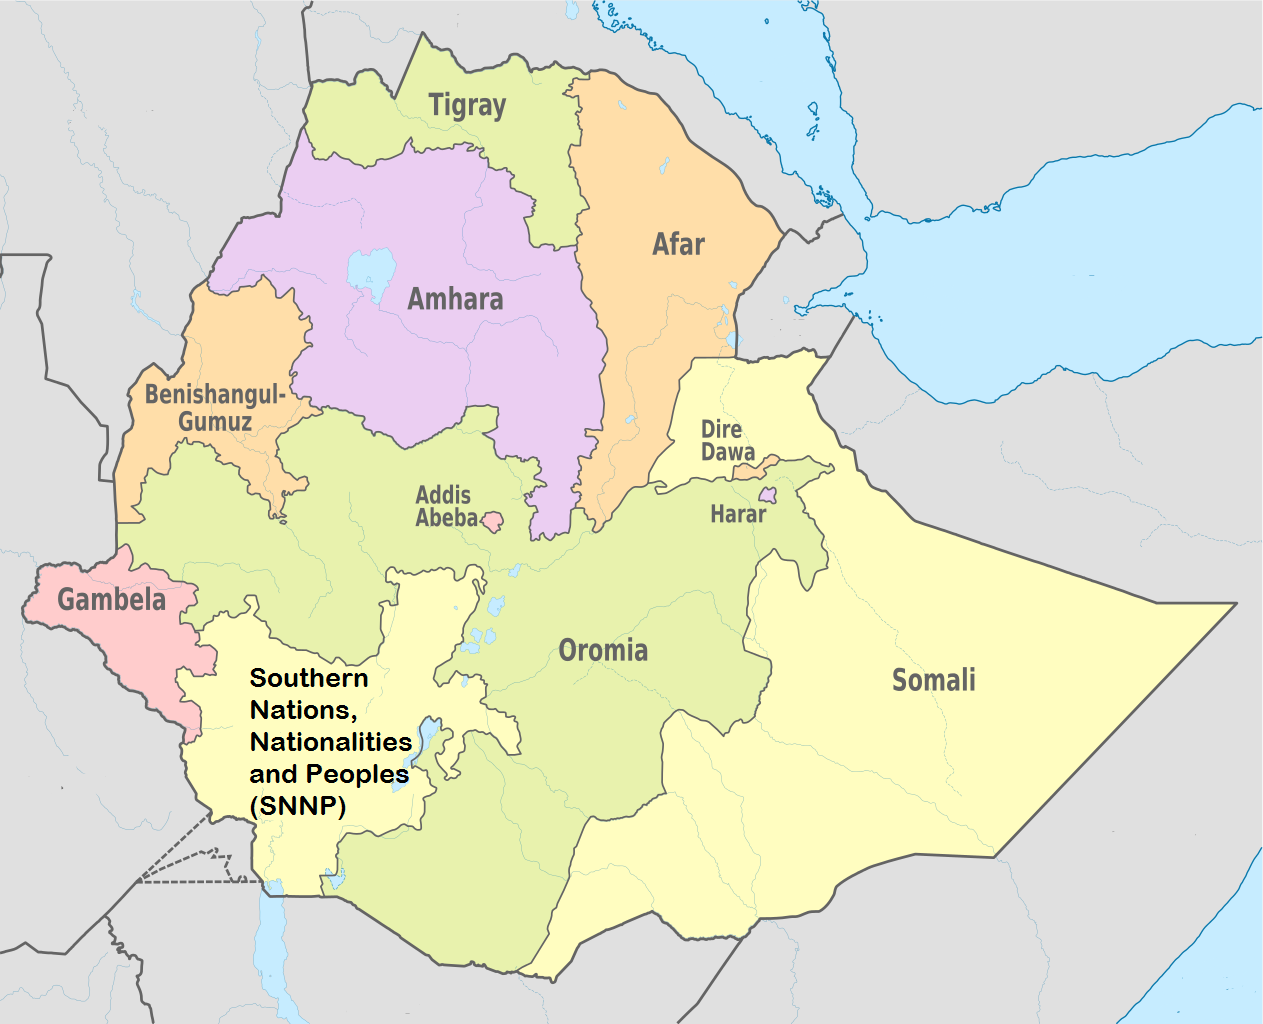 Ethiopia Regions, Cities, and Population | Ethiopia, Tigray ...